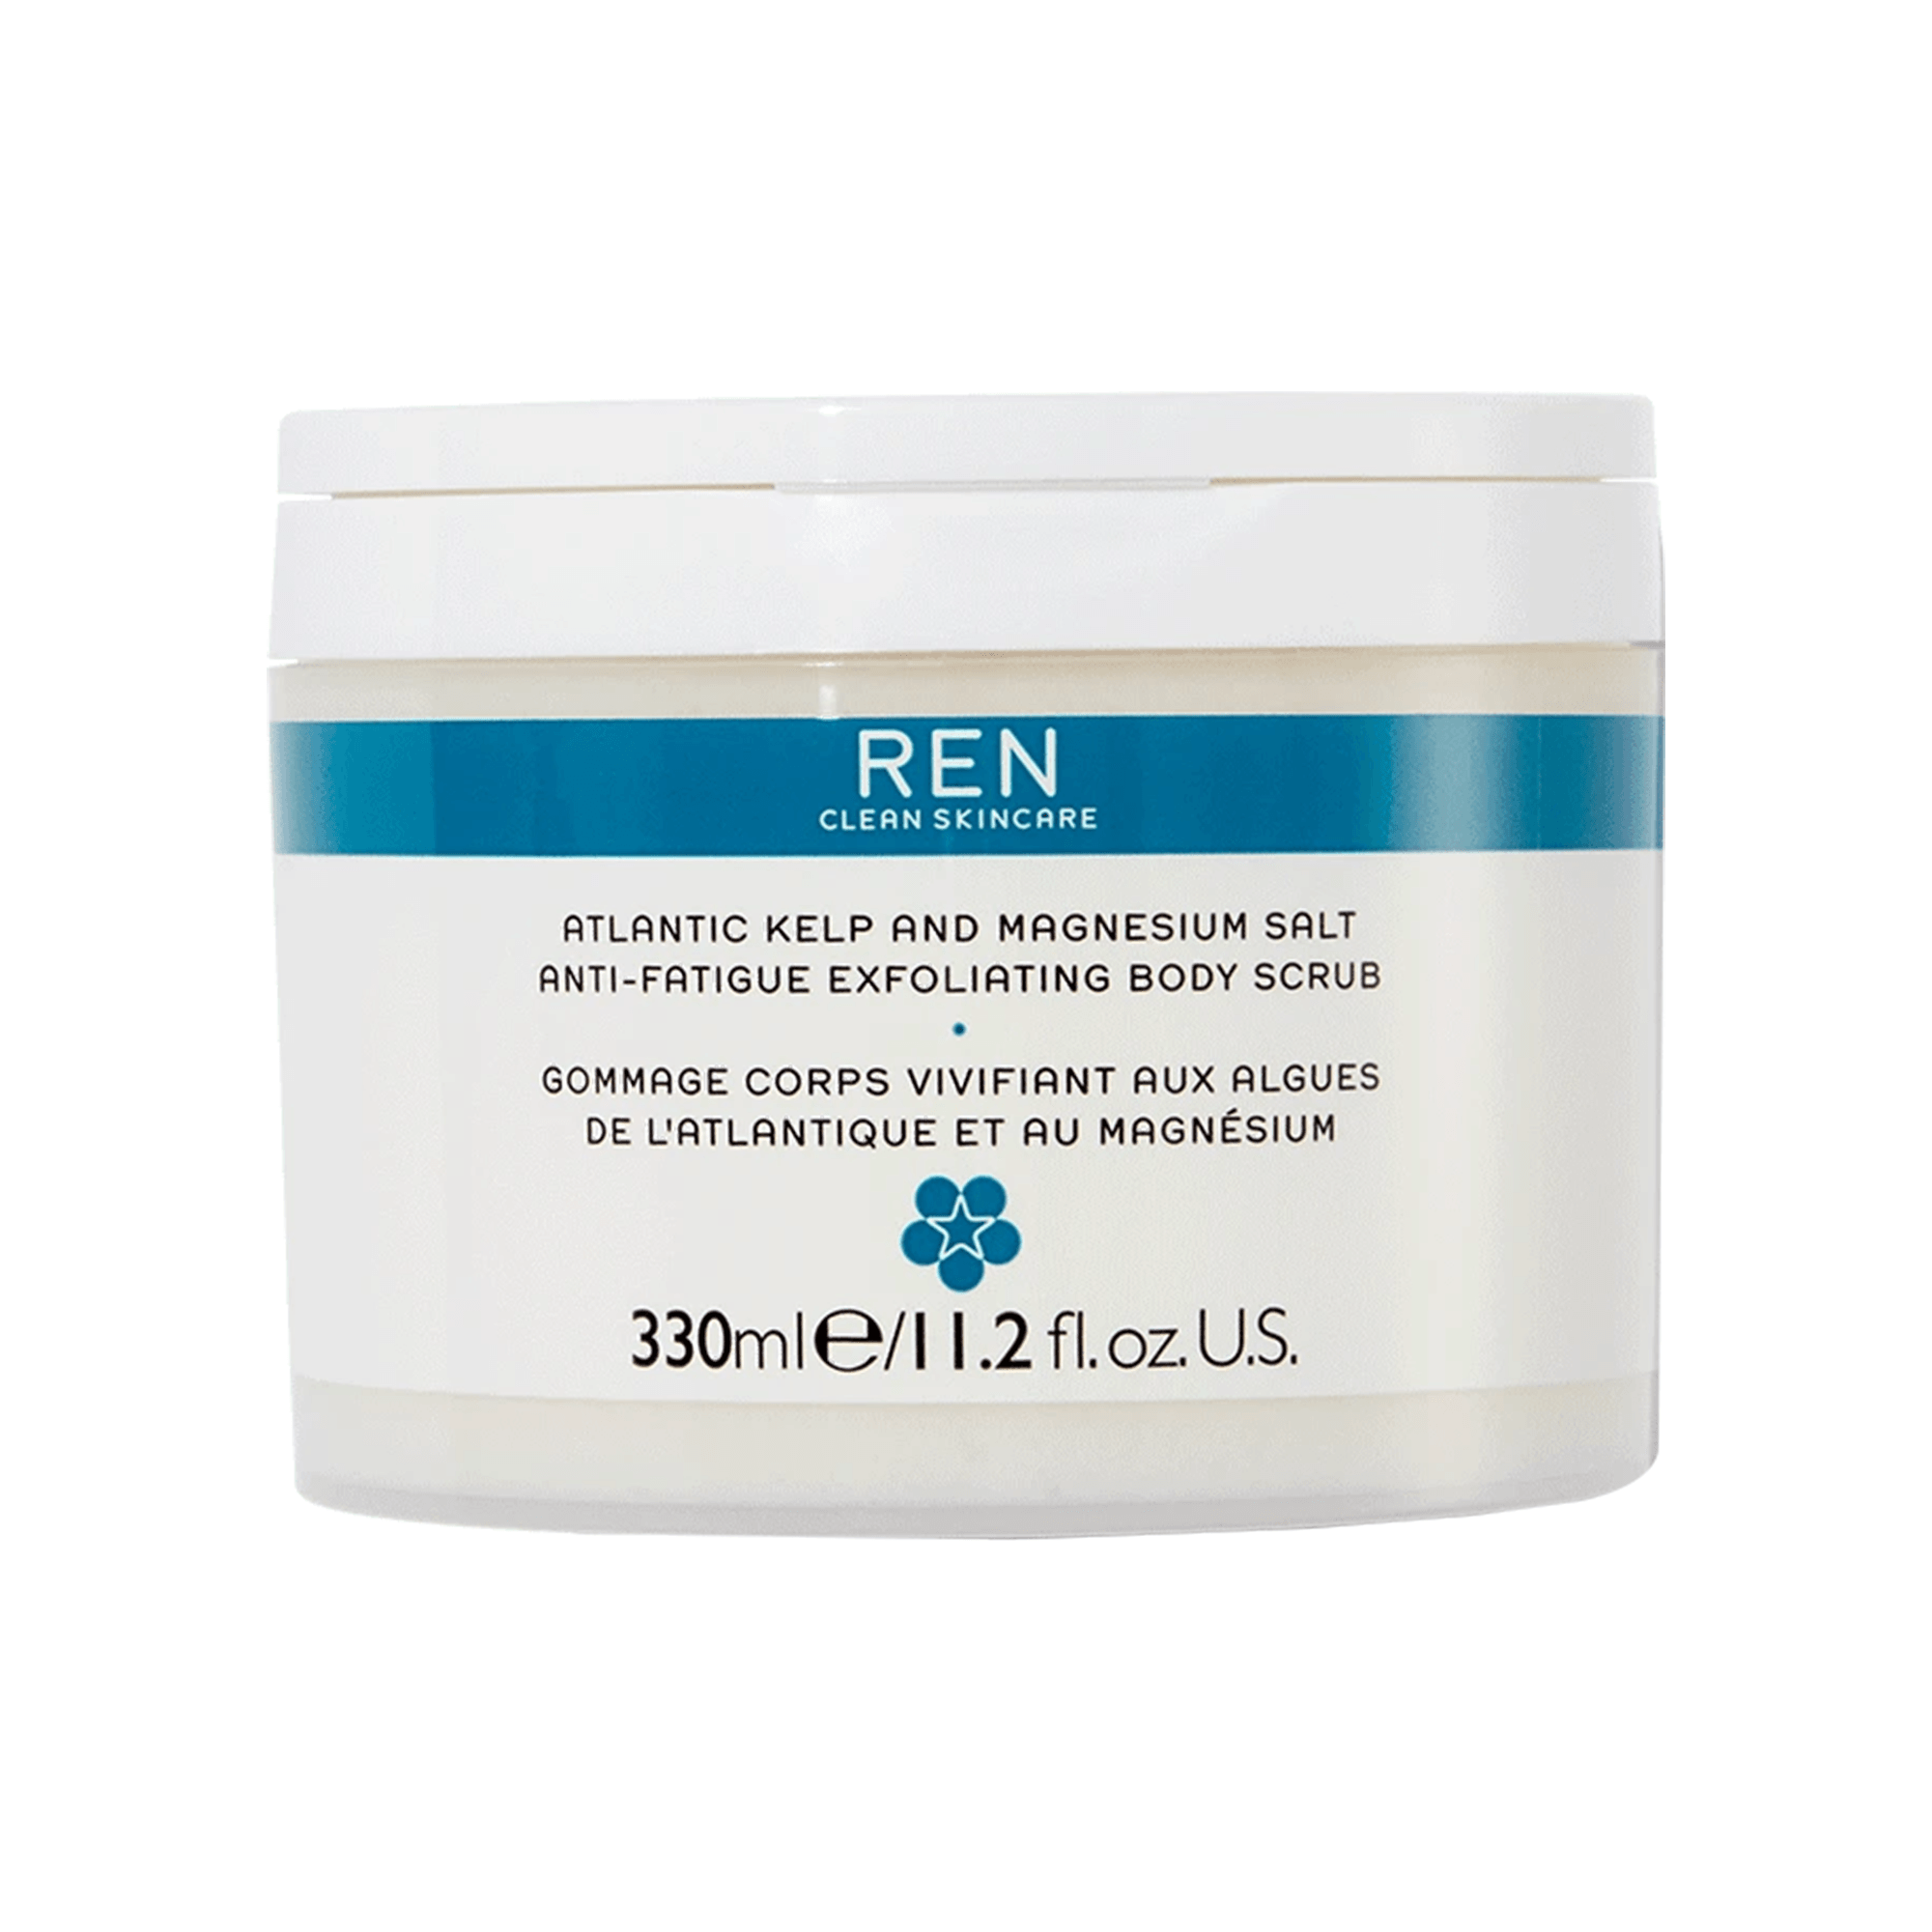 REN Clean Skincare Atlantic Kelp and Magnesium Salt Anti-Fatigue Exfoliating Body Scrub at Socialite Beauty Canada